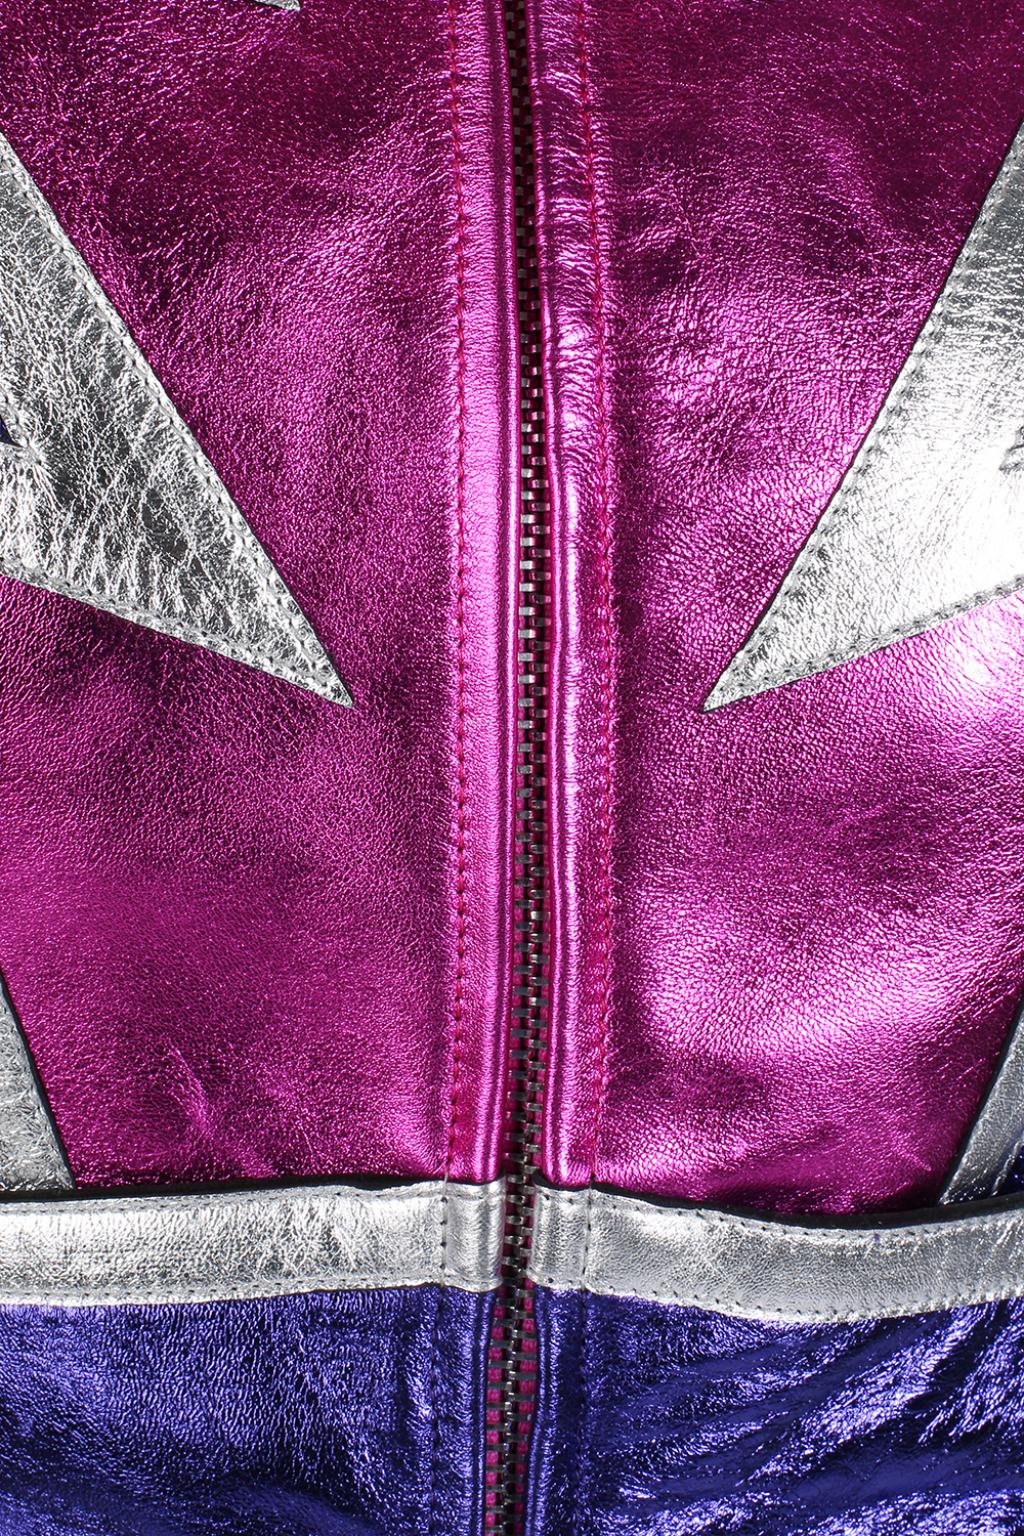 dsquared2 metallic jacket